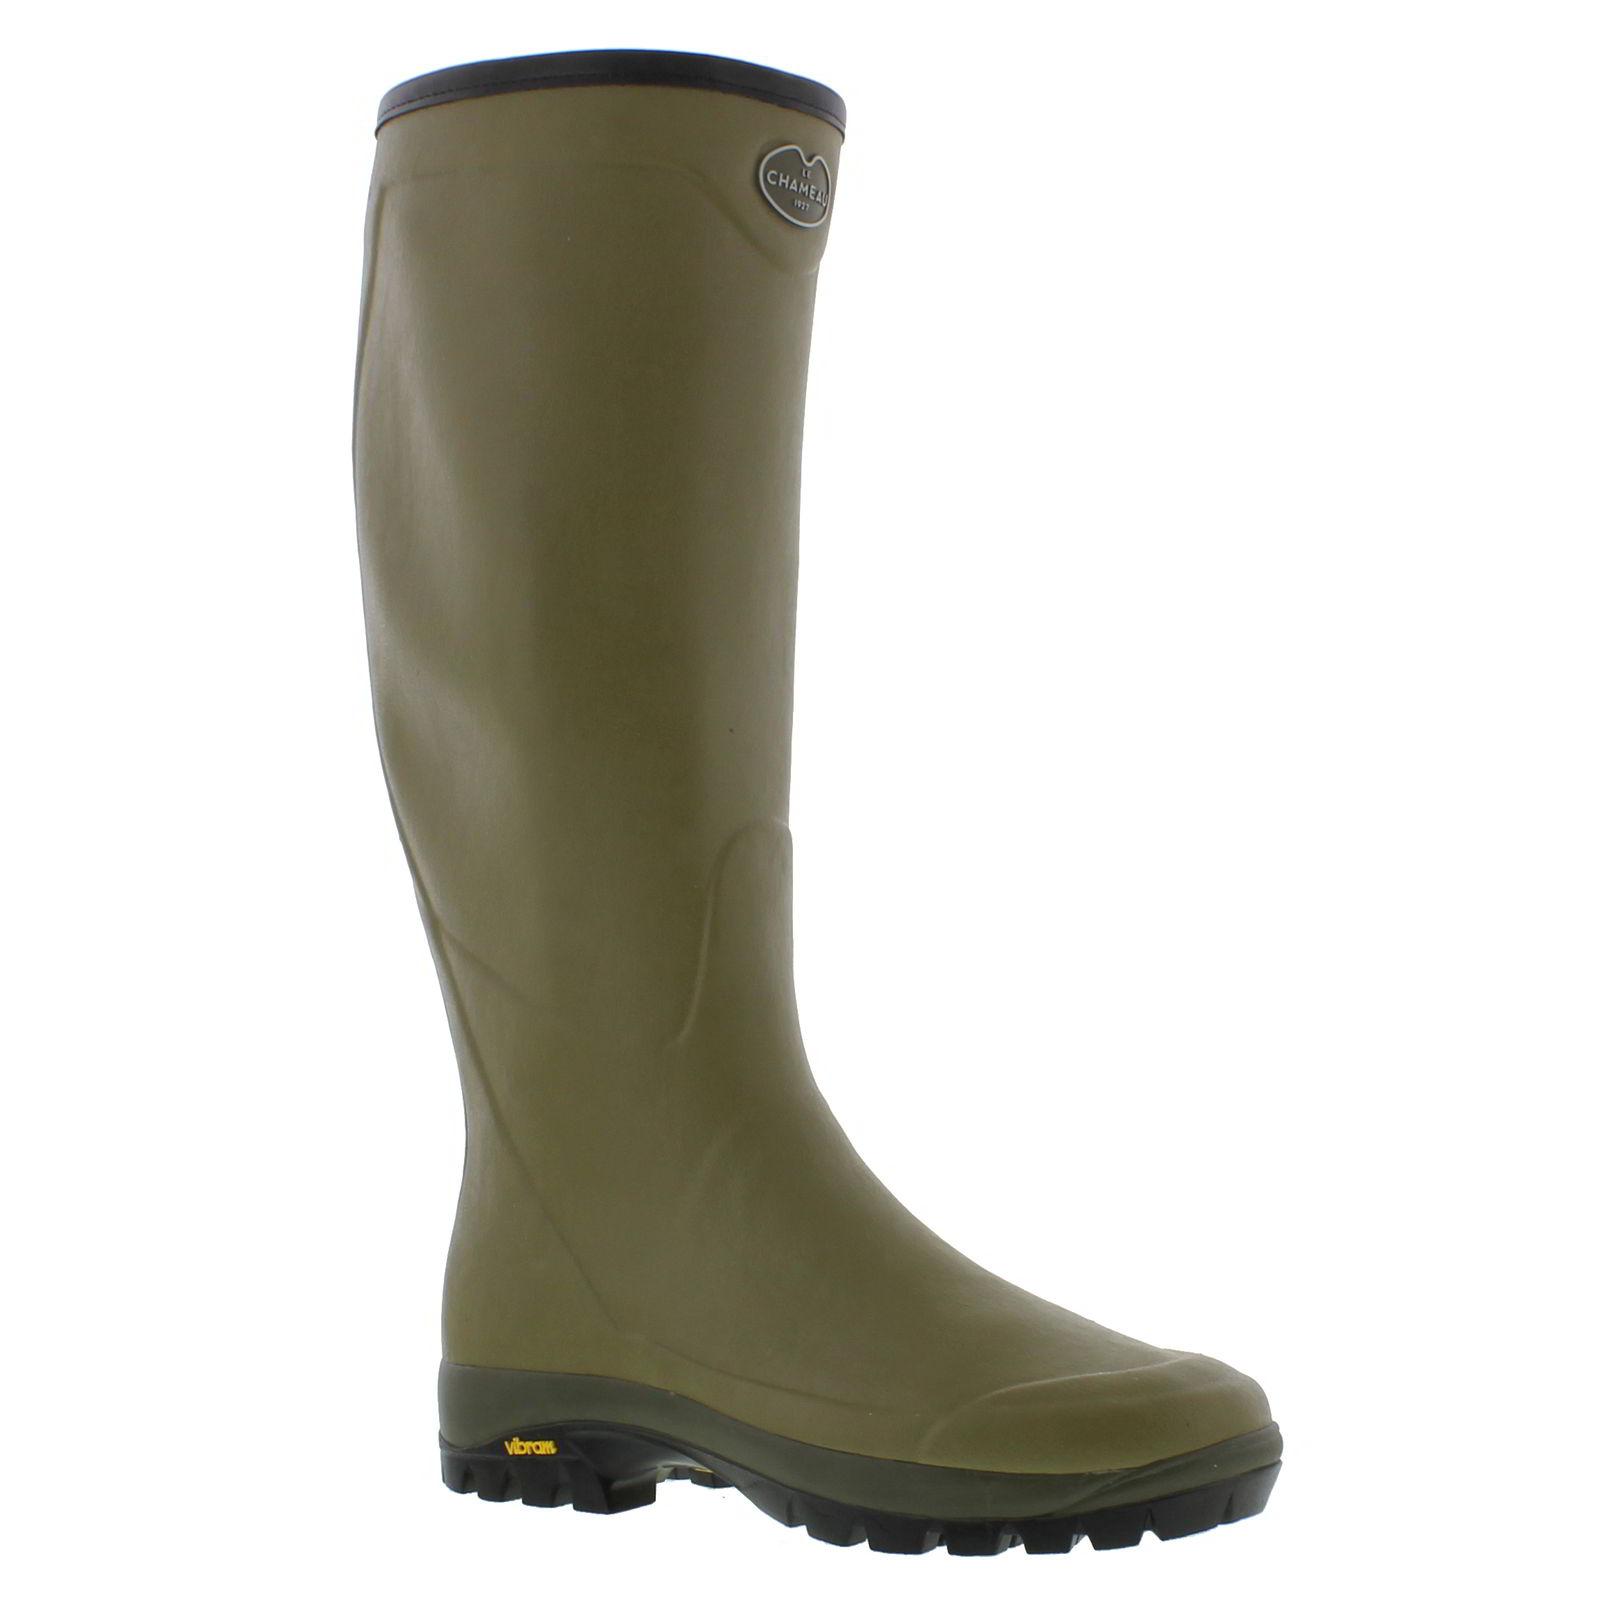 Le Chameau Mens Country Vibram Wellies Rain Boots - UK 6.5